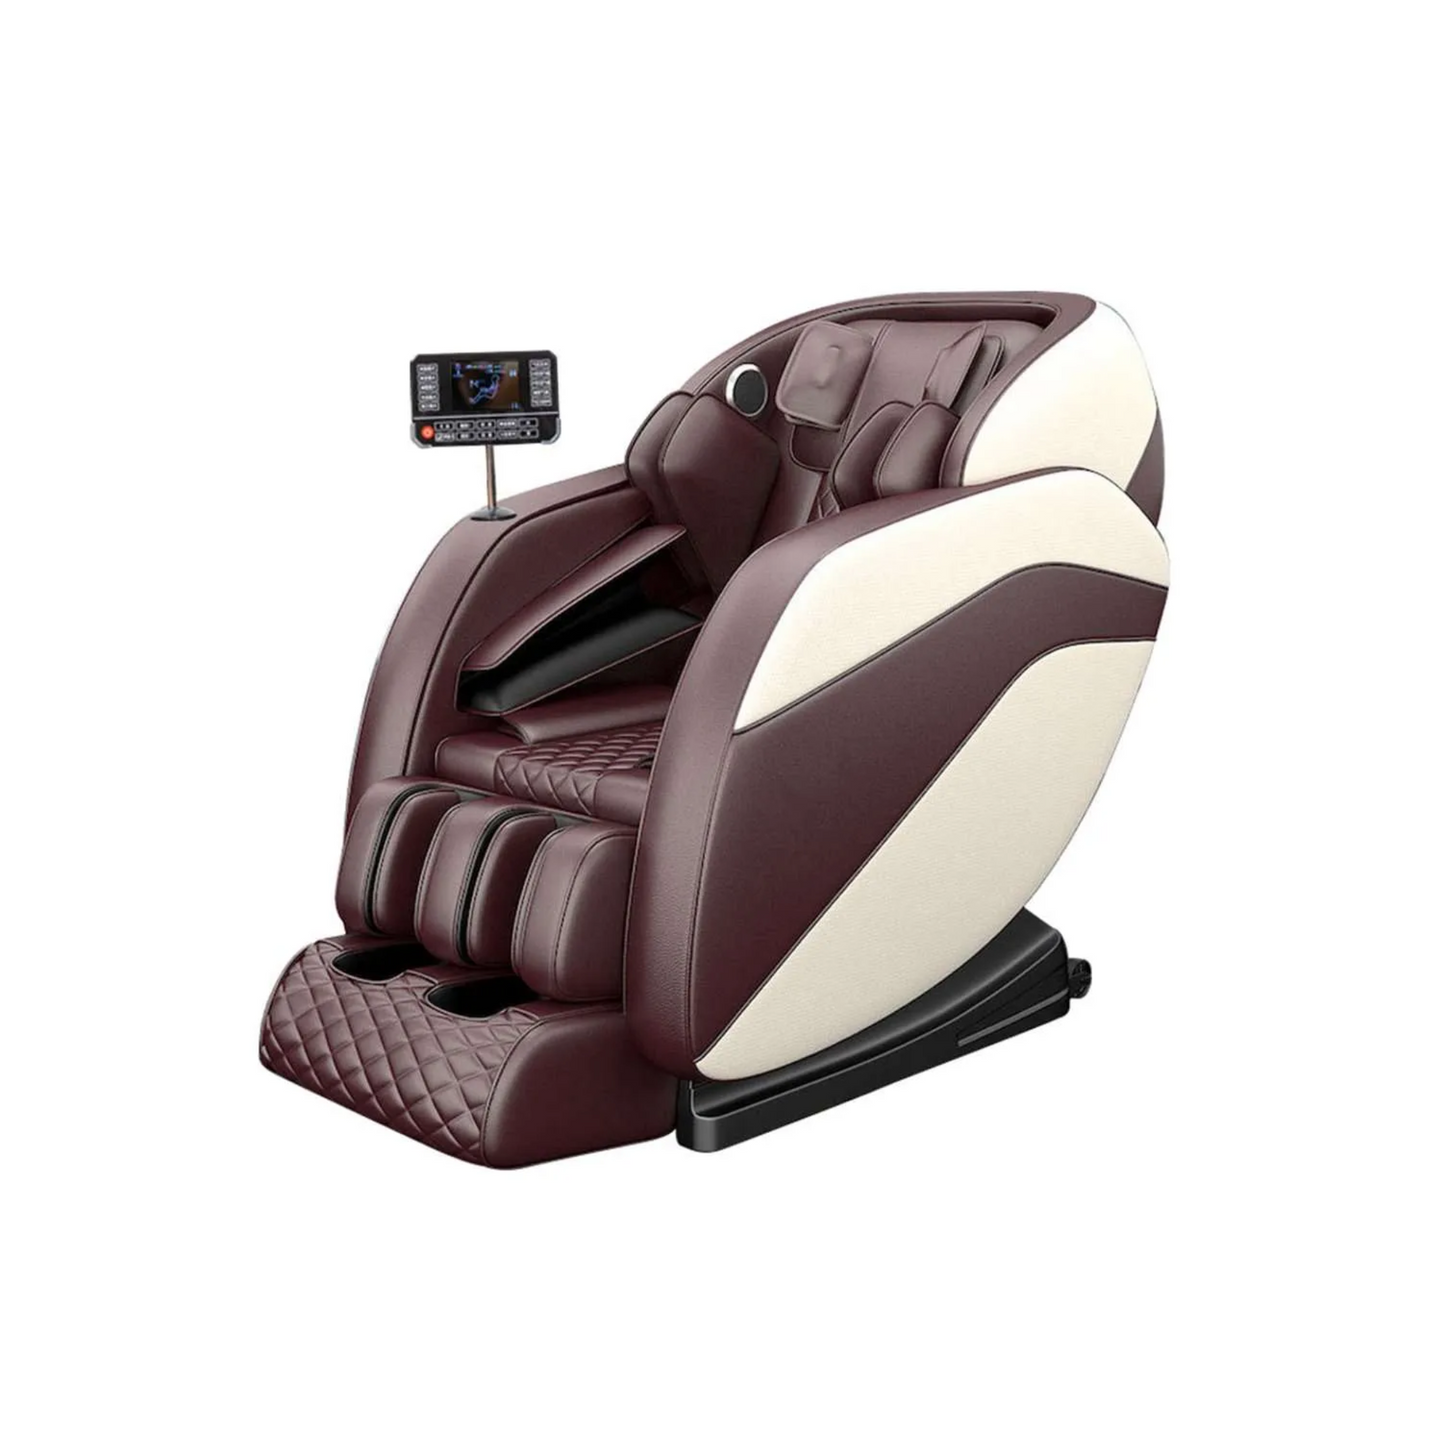 8 Series Royal 10R 10-Hand Massage Chair